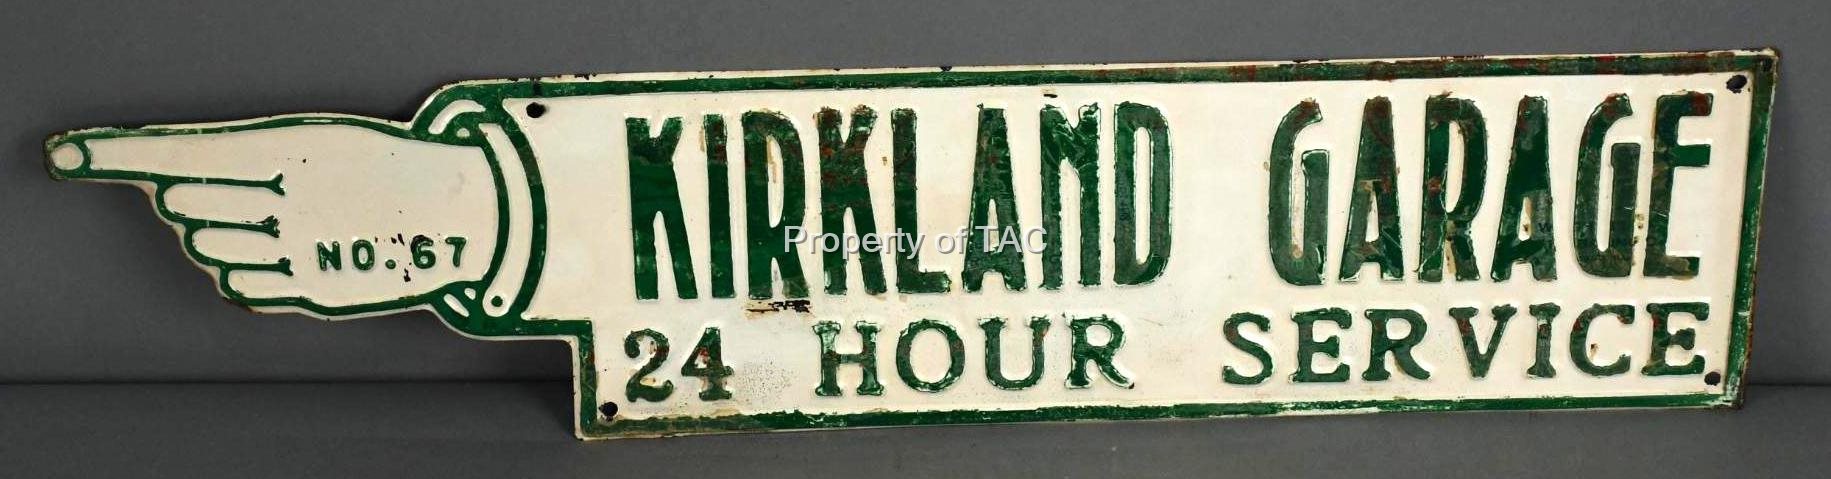 Kirkland Garage "24 Hour Service" Metal Hand Sign